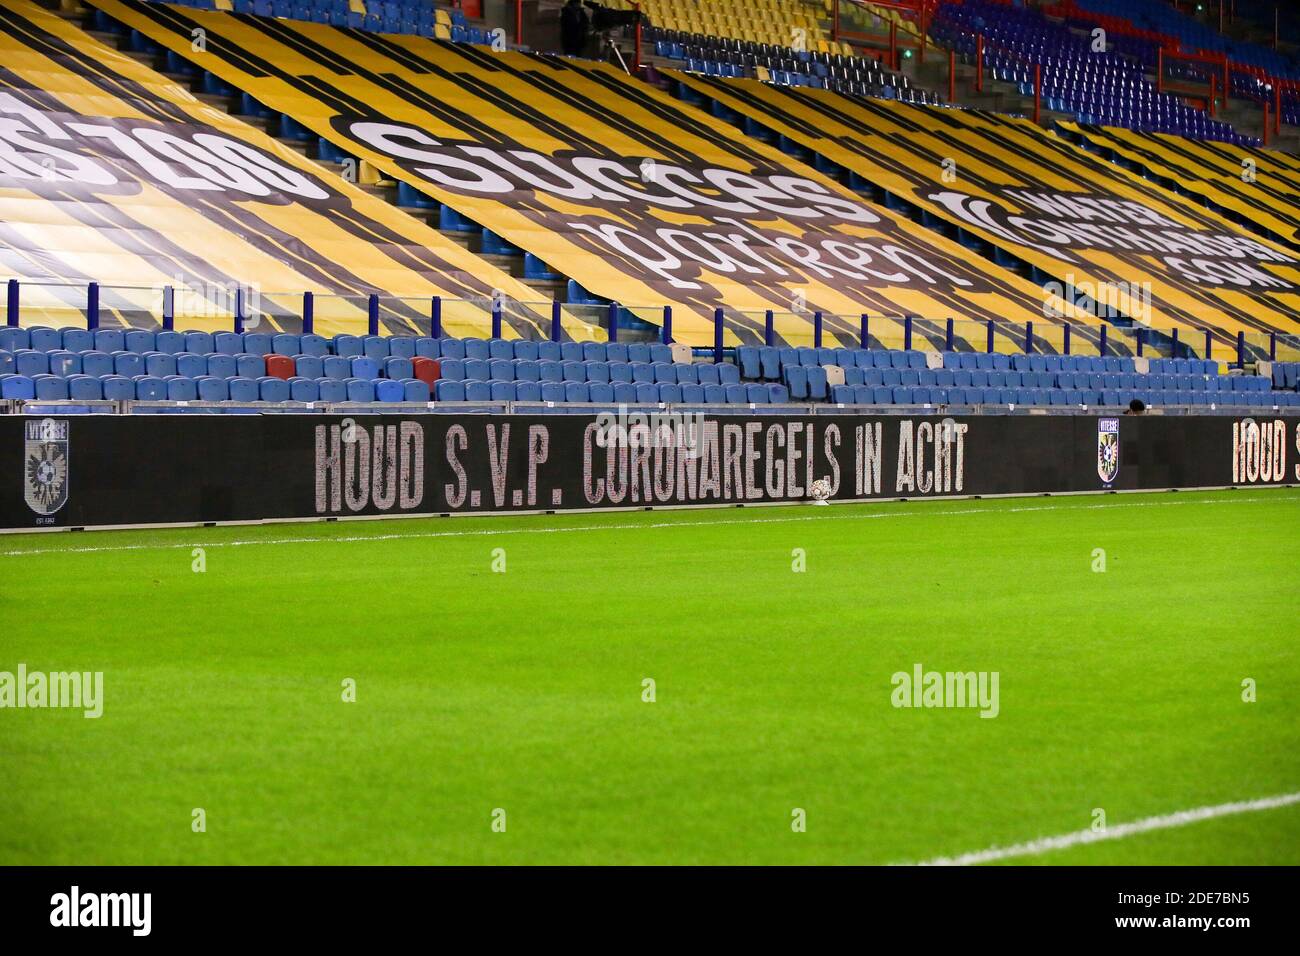 ARNHEM, NETHERLANDS - NOVEMBER 29: houd s.v.p. coronaregels in acht; Succesparken, Waterontharder.com; during the Dutch Eredivisie match between Vites Stock Photo